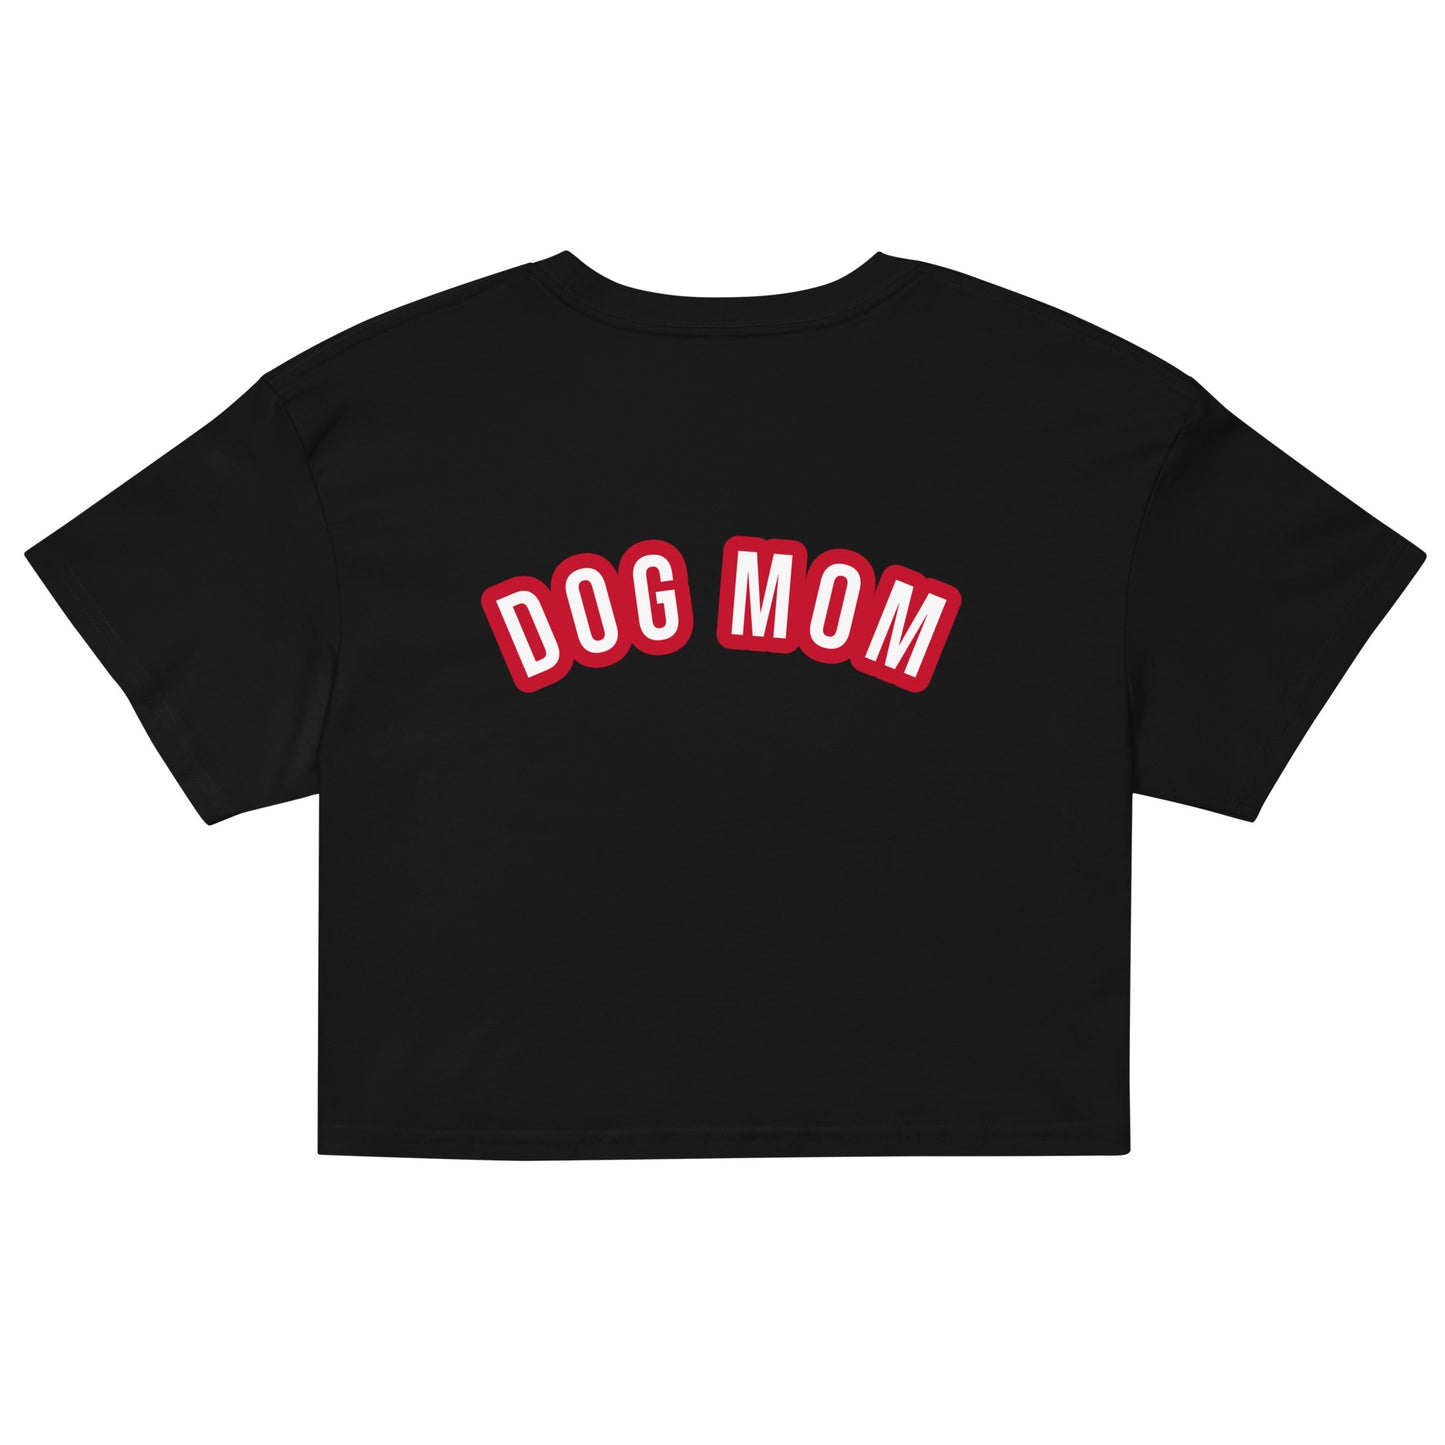 Dog Mom Crop Top